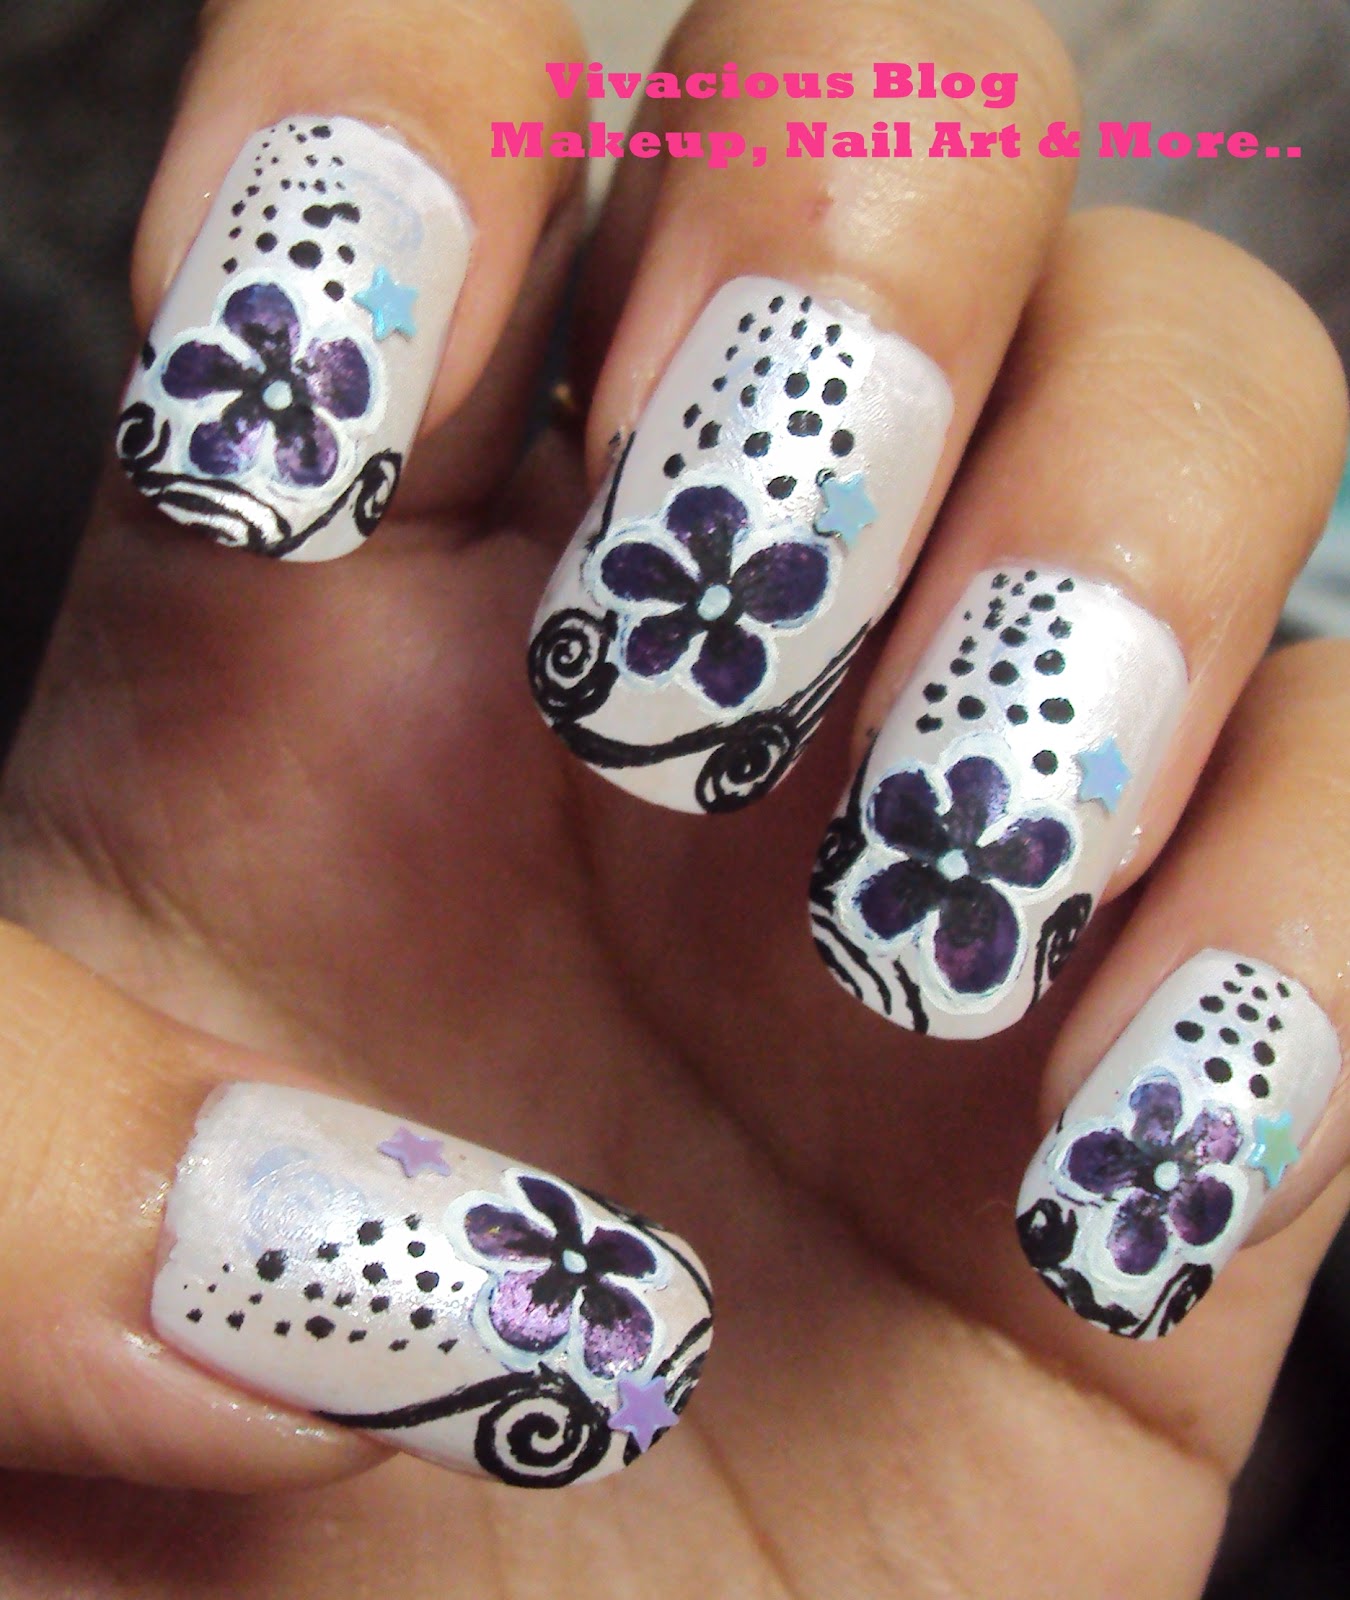 Vivacious Blog: Purple Pink Flower Nail Art